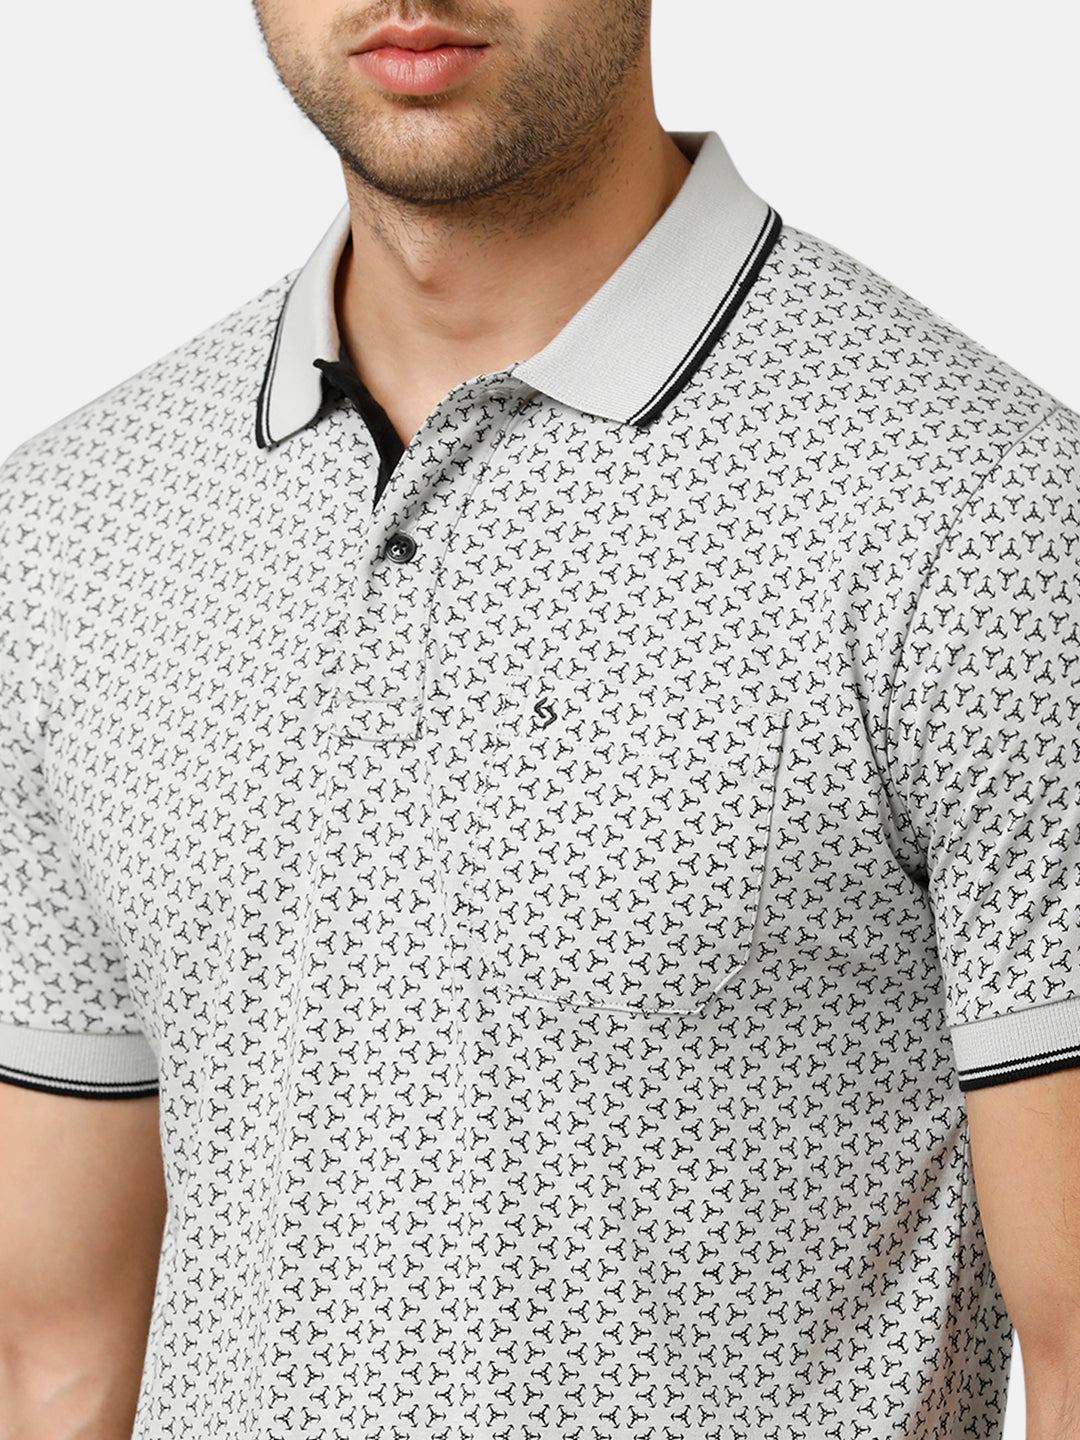 Classic Polo Mens Cotton Half Sleeve Printed Slim Fit Polo Neck Light Grey Color T-Shirt | Bello 173 B